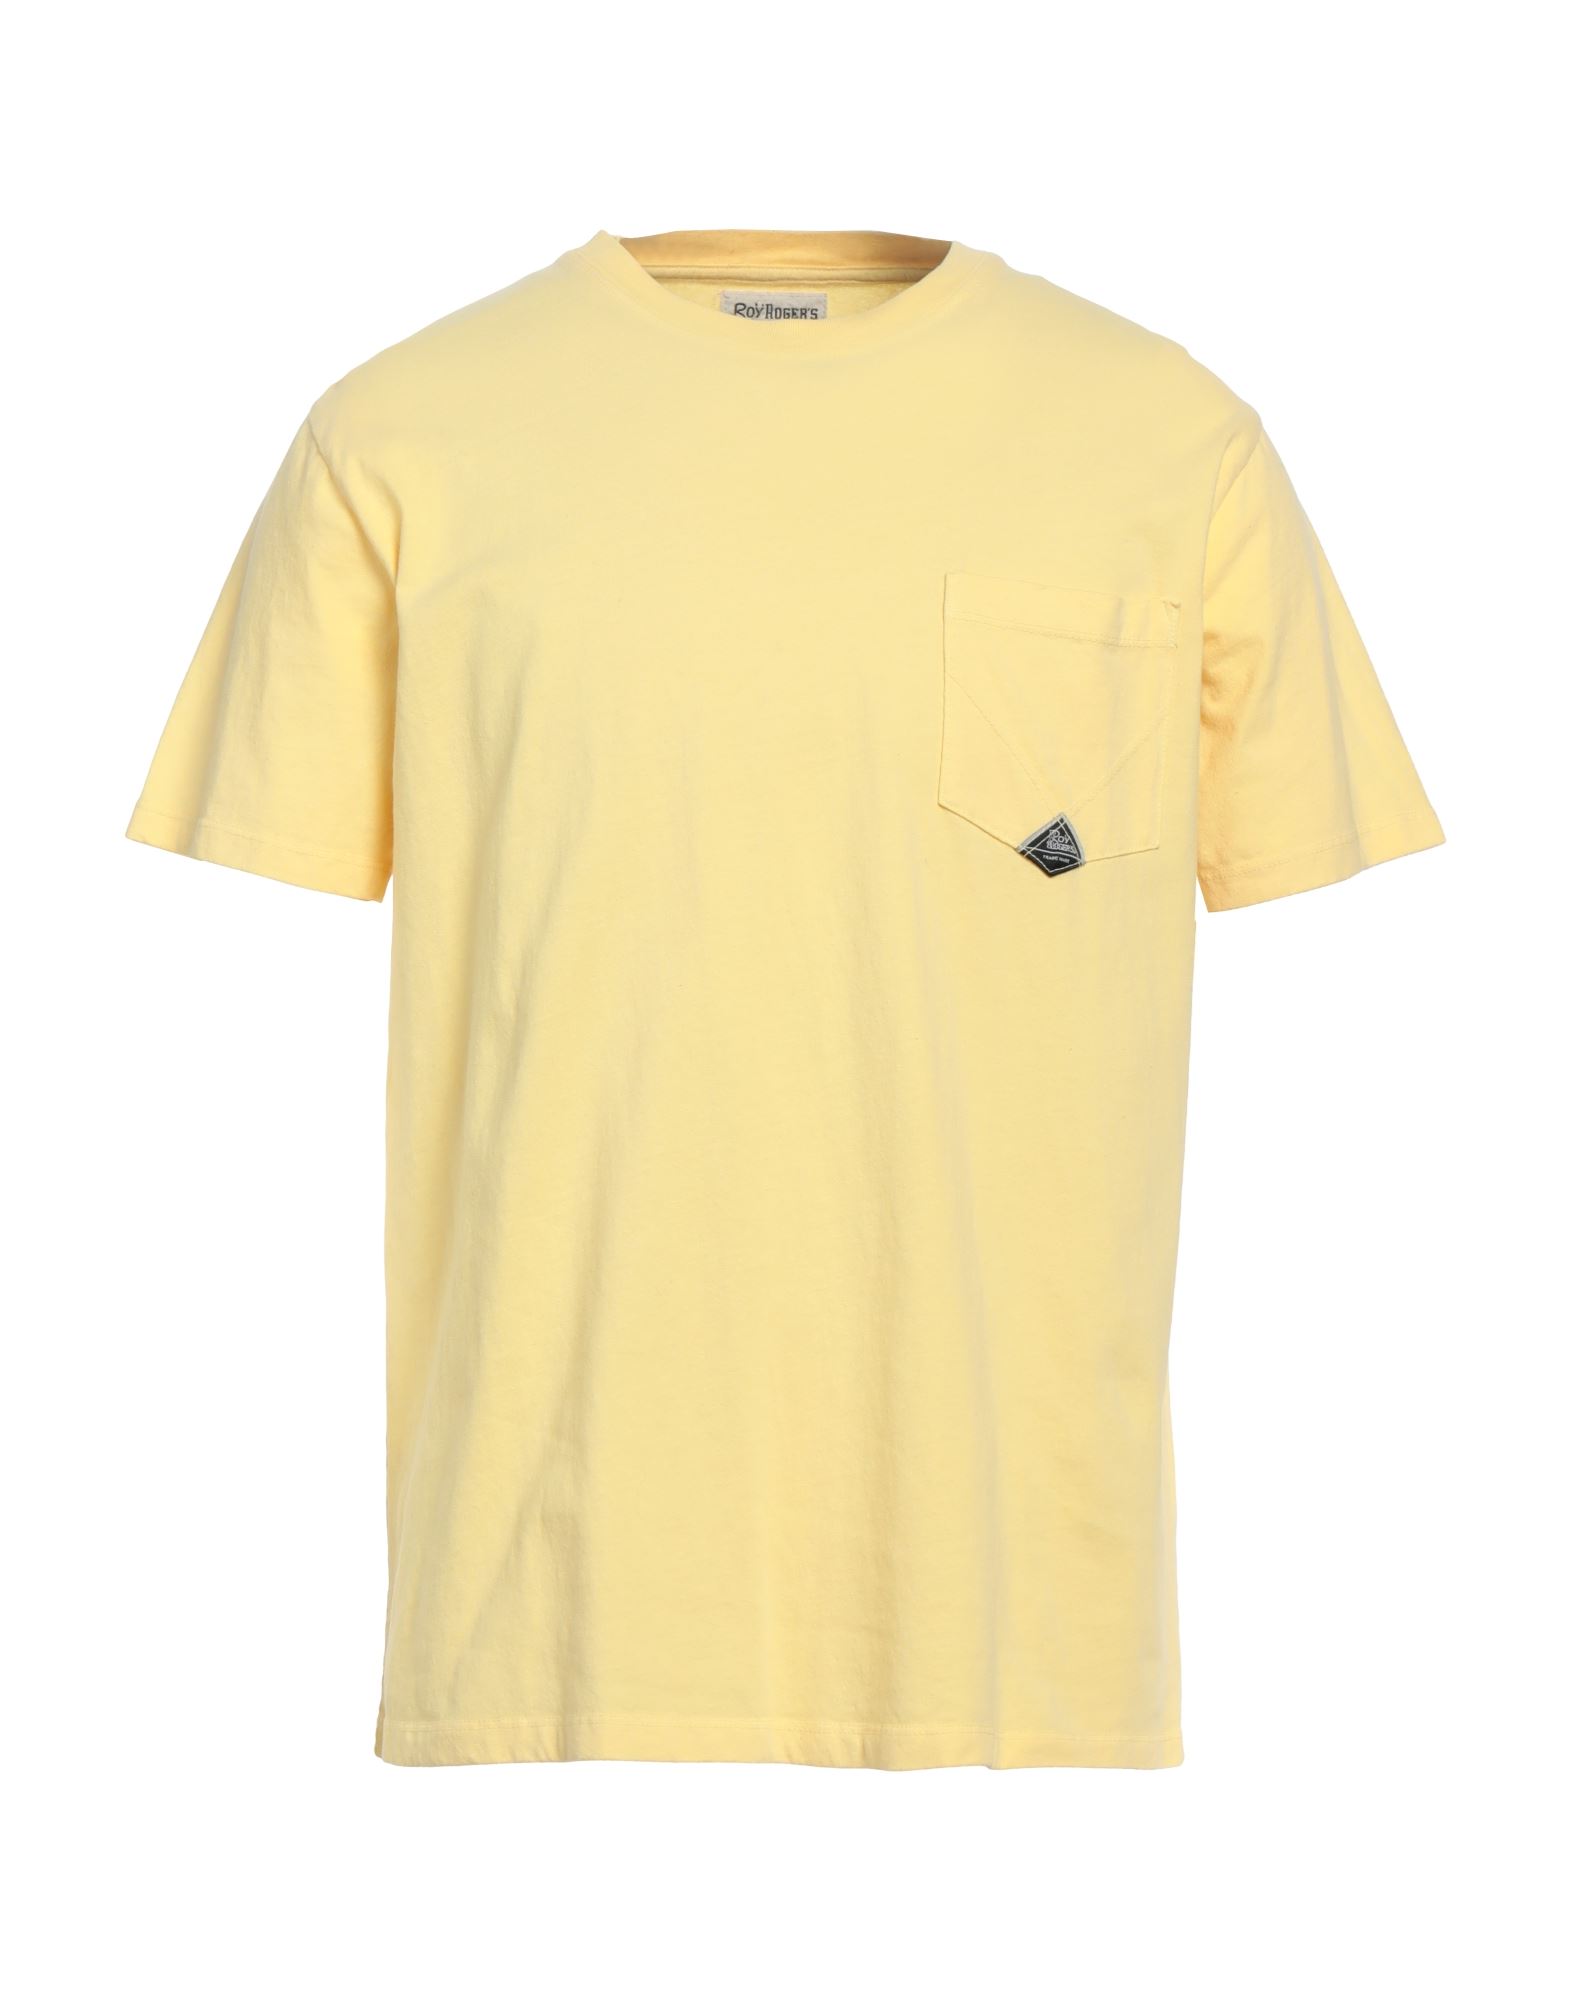 Roy Rogers Roÿ Roger's Man T-shirt Yellow Size Xs Cotton